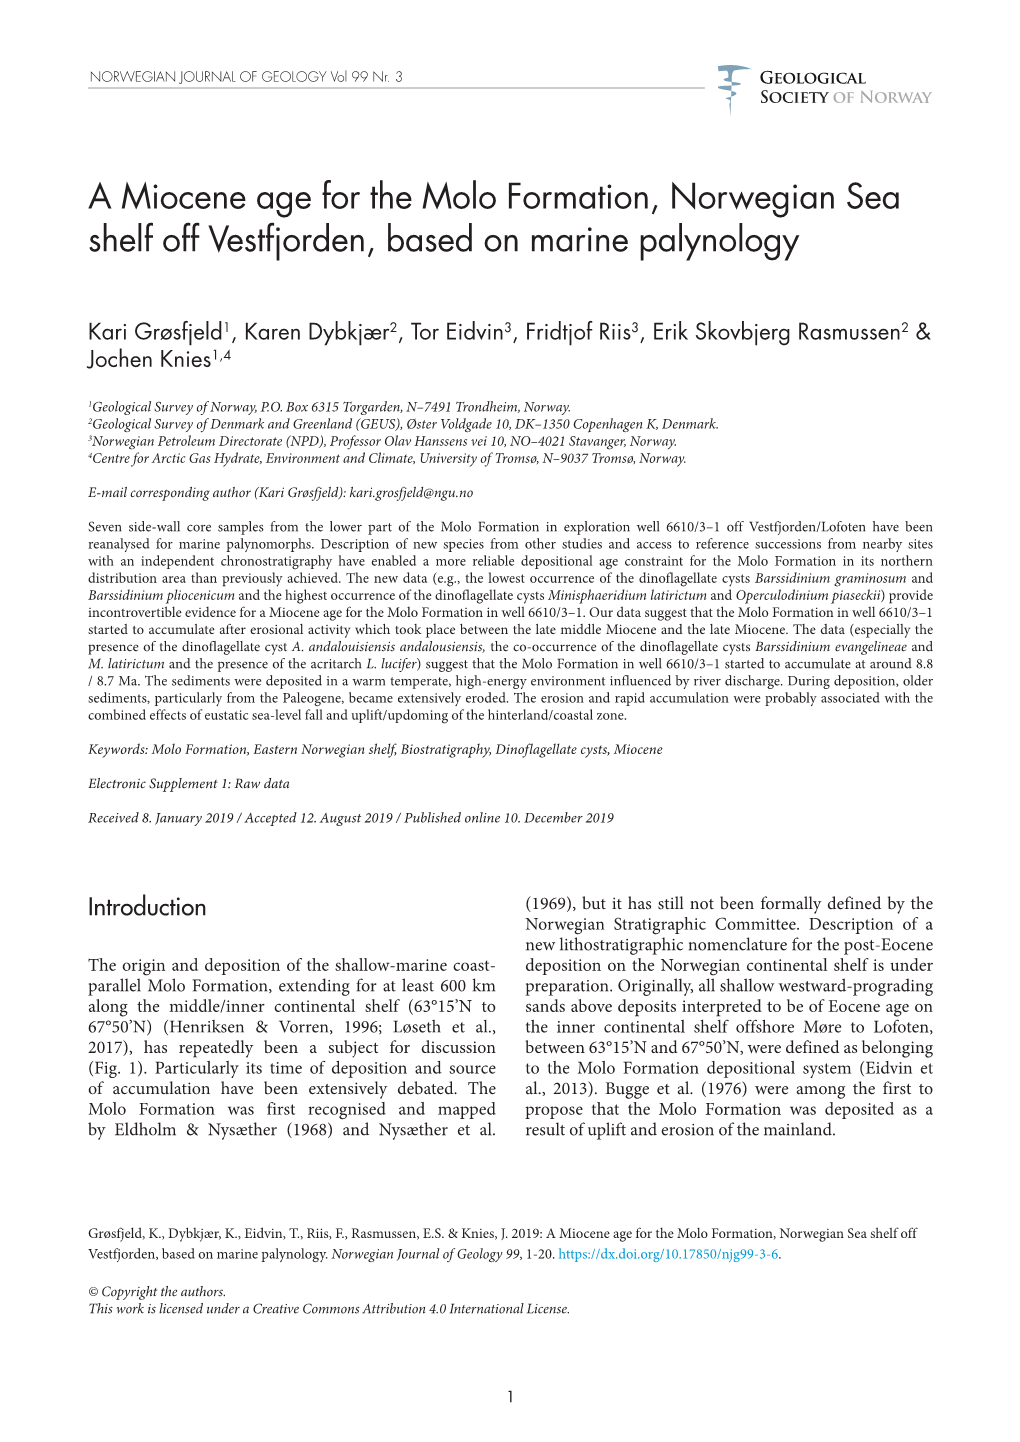 A Miocene Age for the Molo Formation, Norwegian Sea Shelf Off Vestfjorden, Based on Marine Palynology